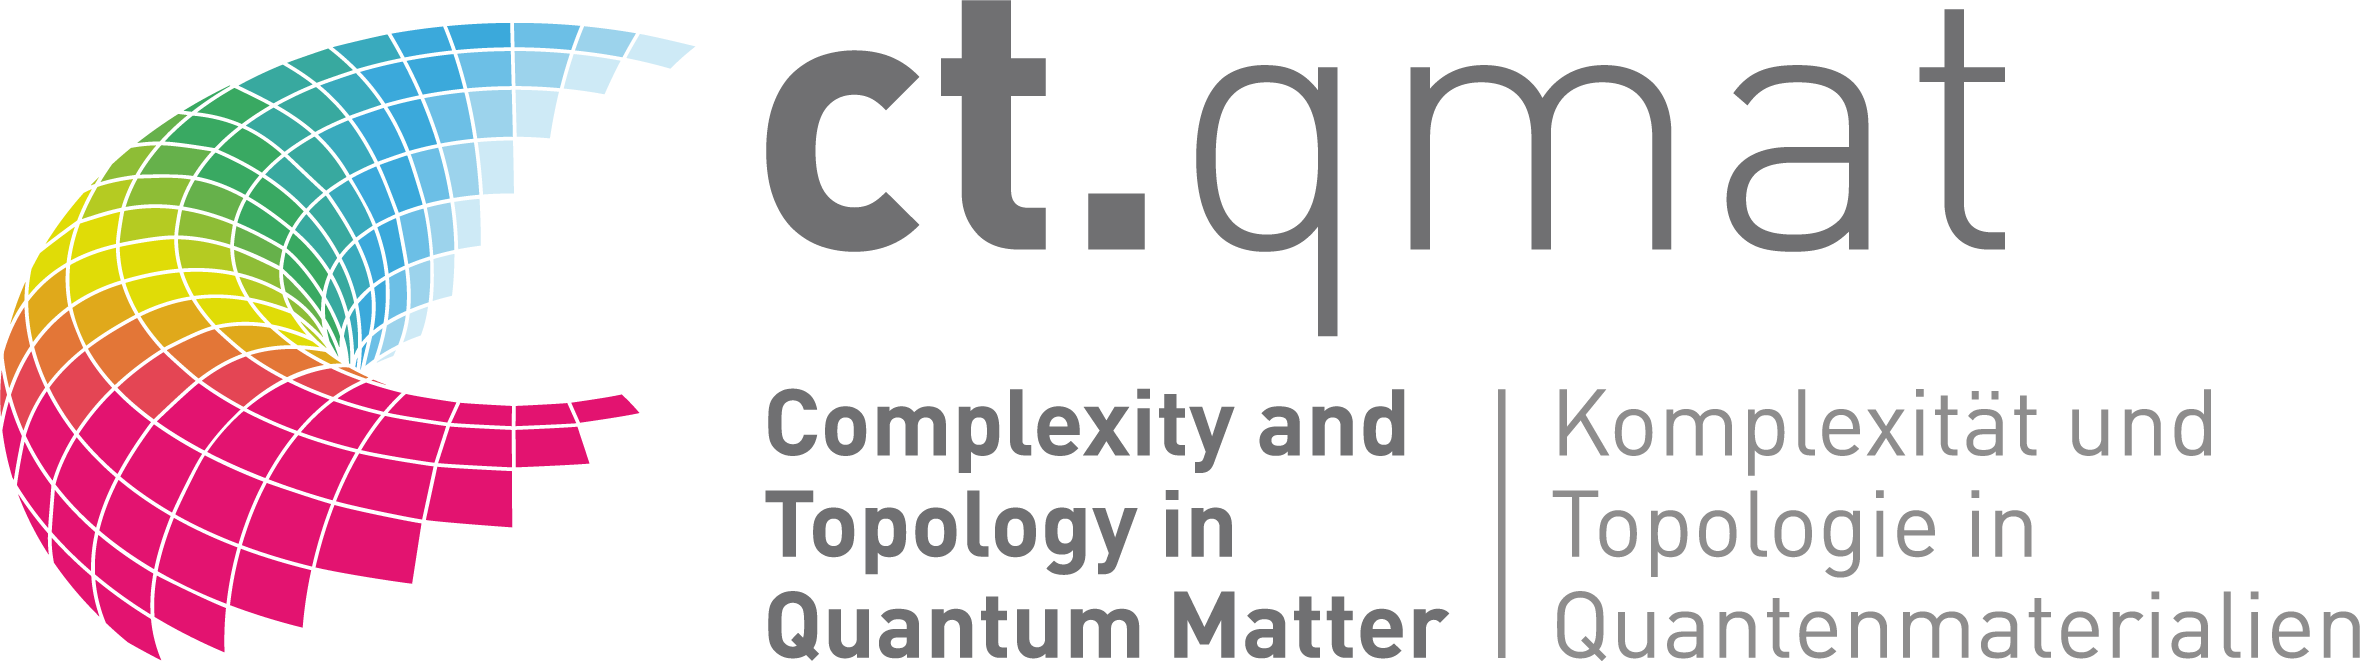 CT.QMAT Logo